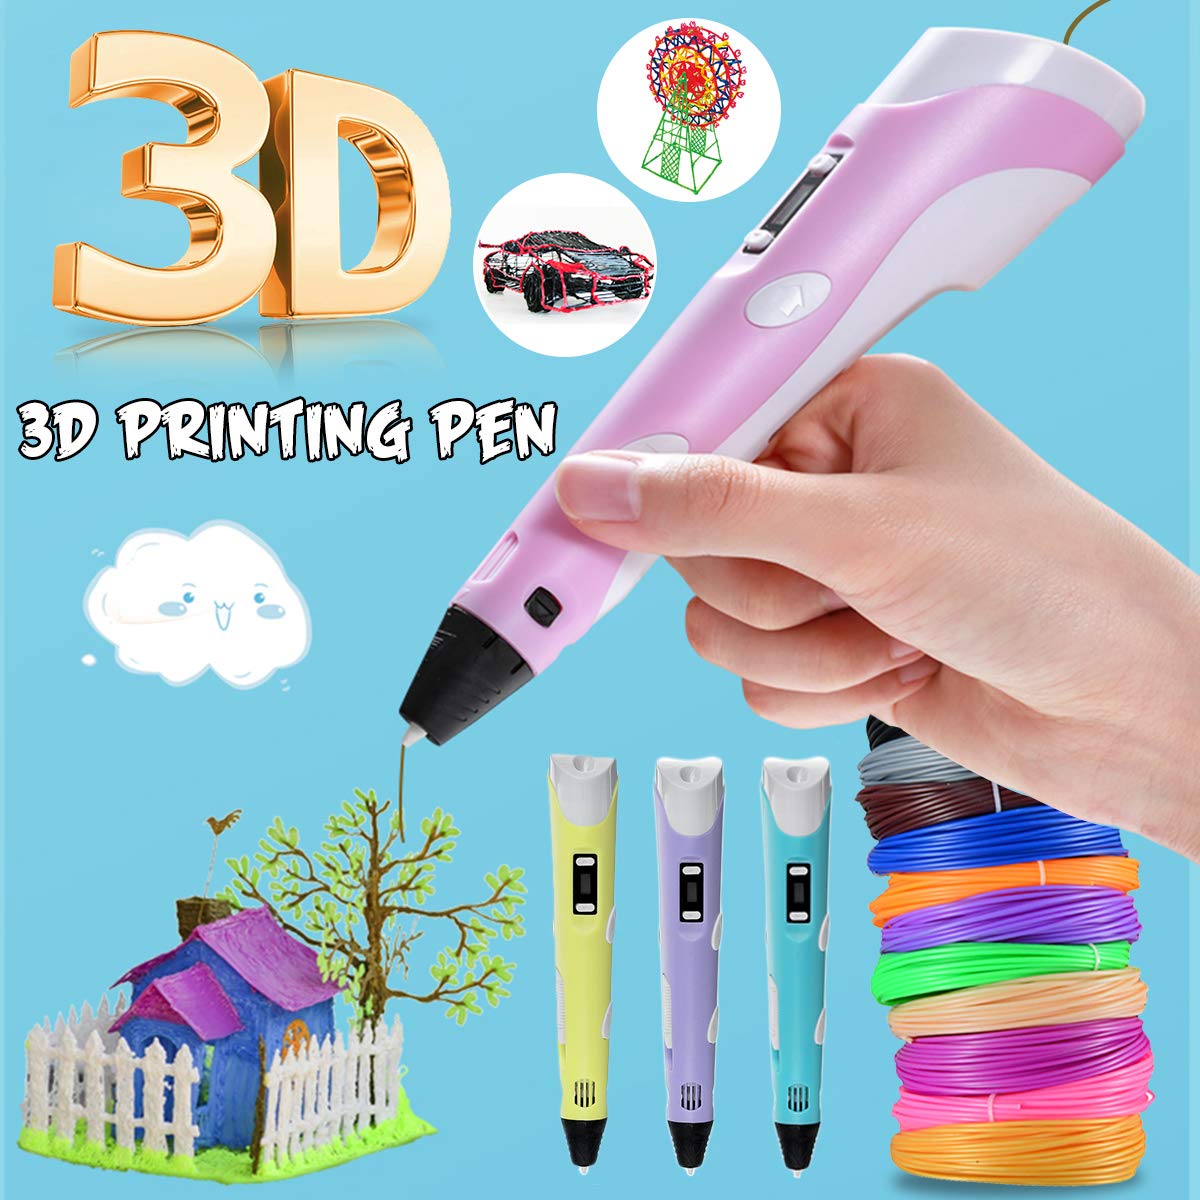 3D Doodler Pen For Realistic Printing, Educational Pen For Art Activity For Kids